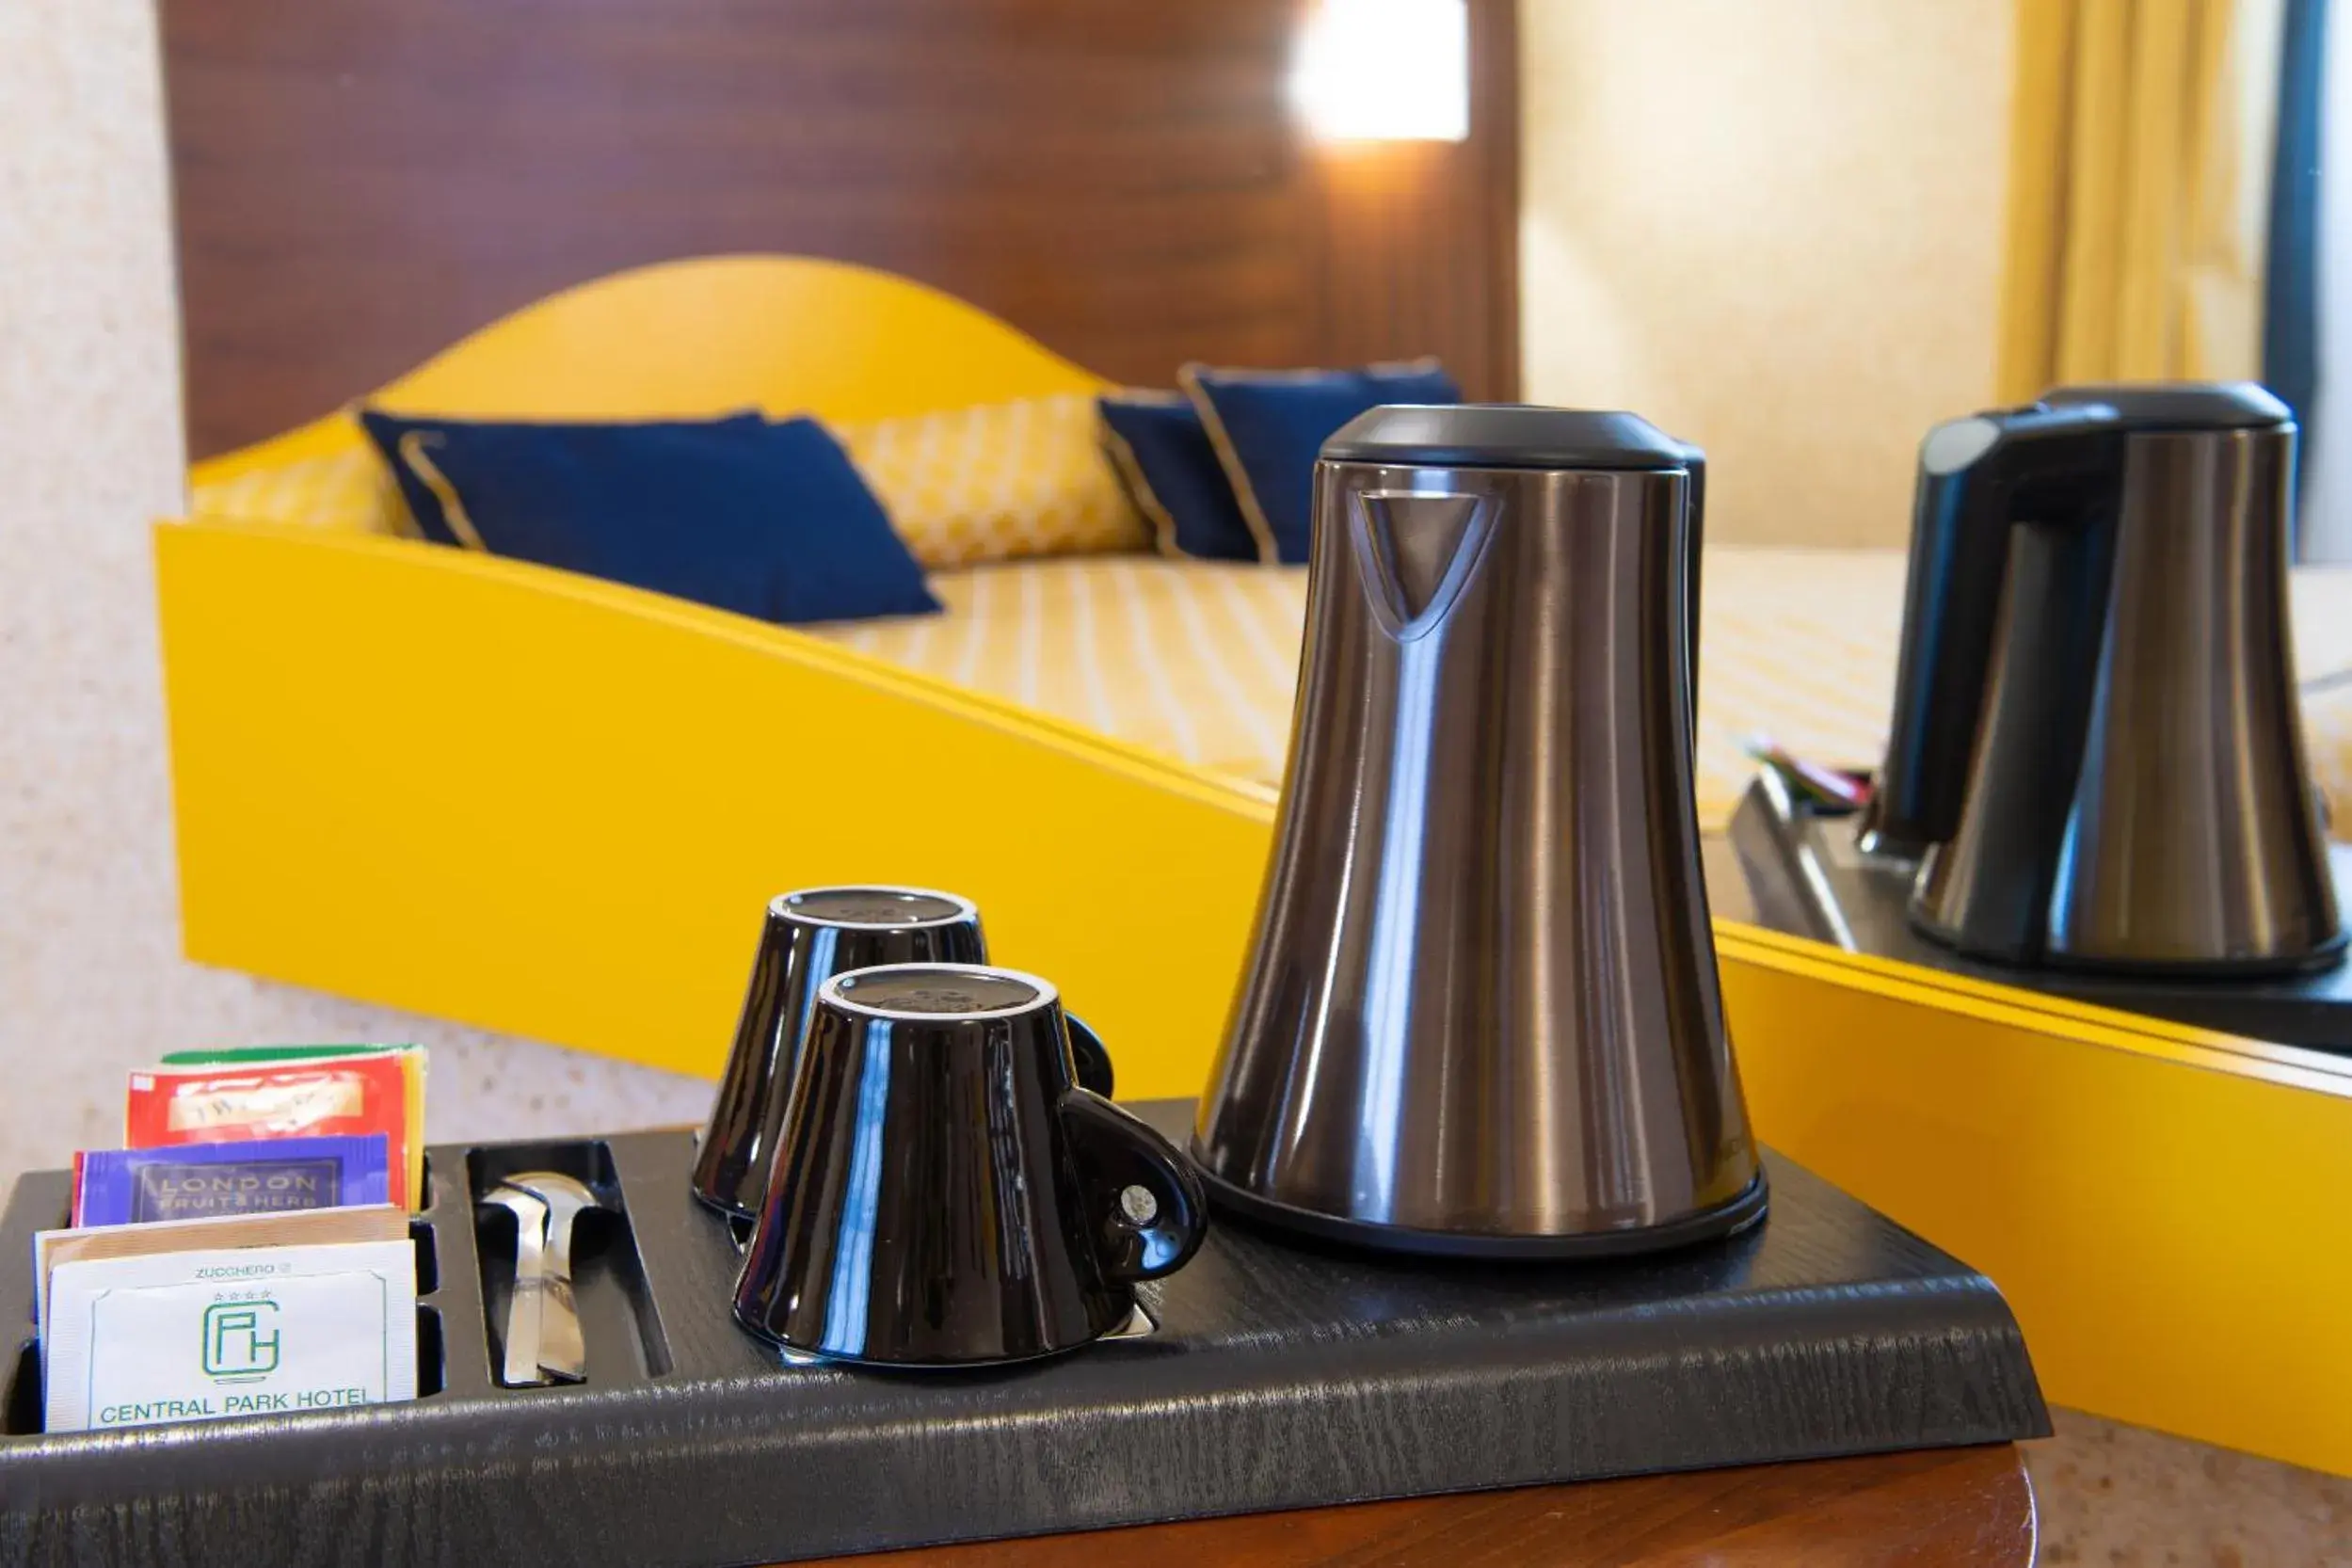 Coffee/Tea Facilities in Central Park Hotel Modena